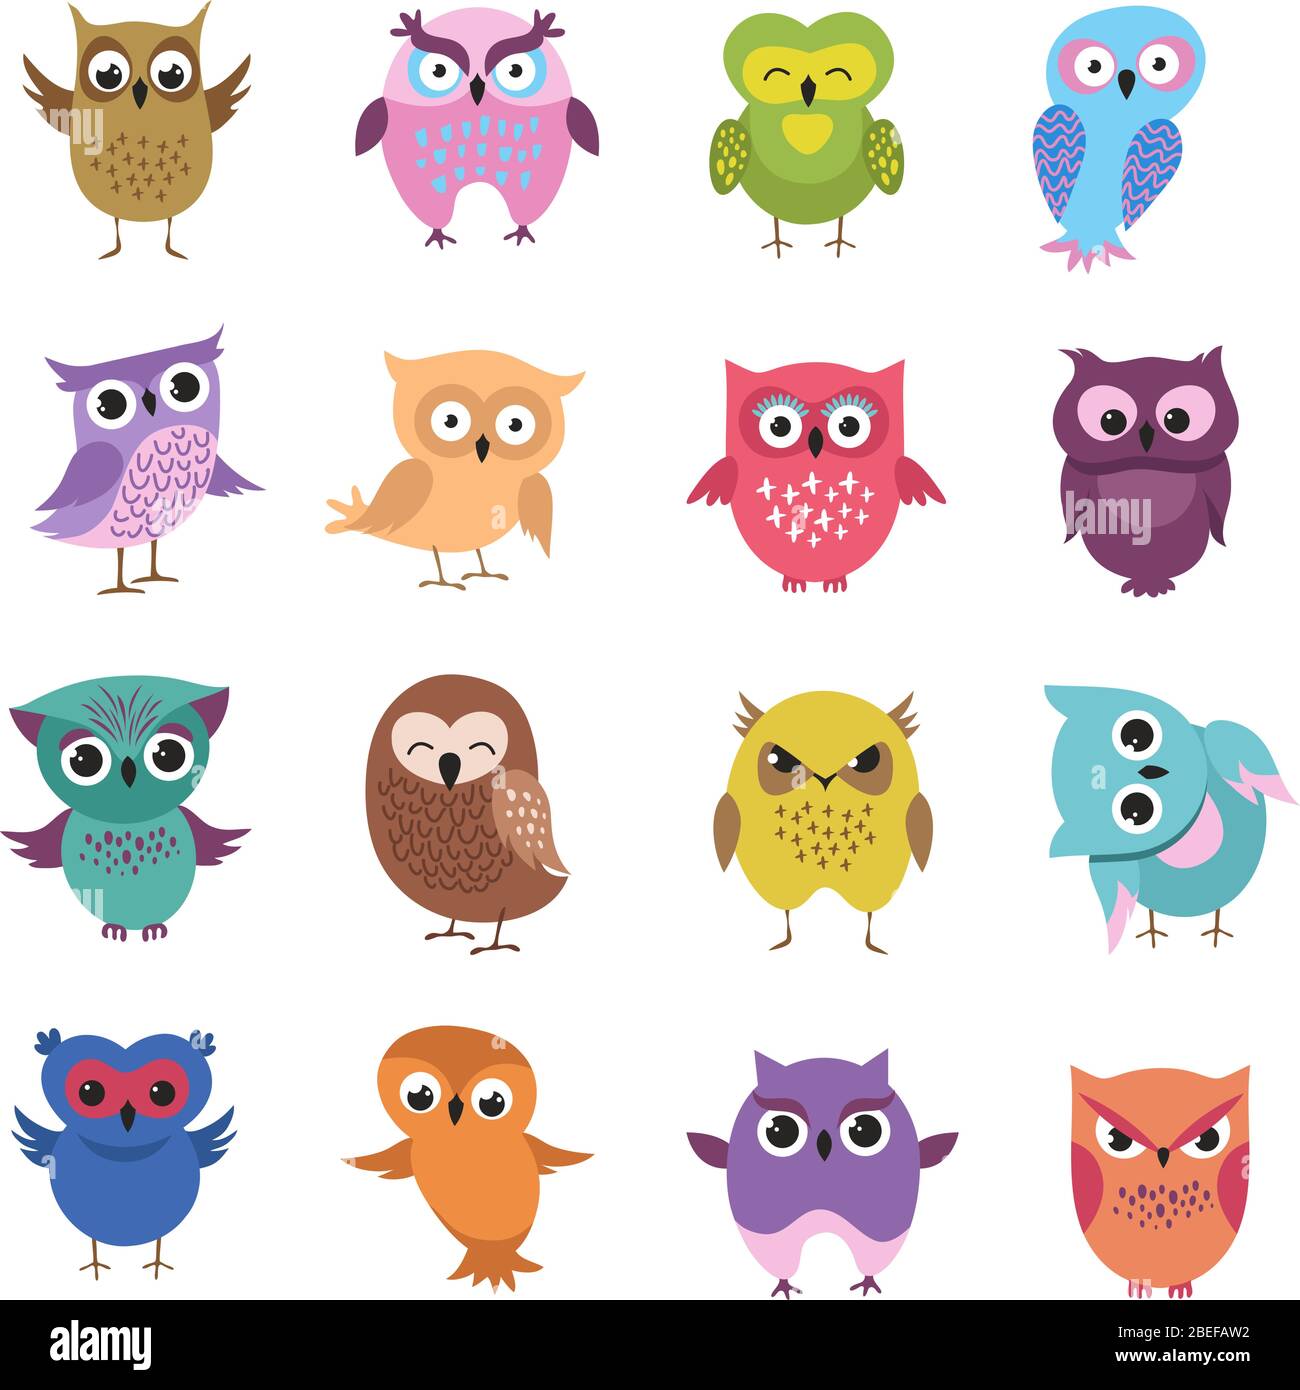 Cute cartoon owl characters vector set. Owl character bird, animal drawing comic and childish illustration Stock Vector